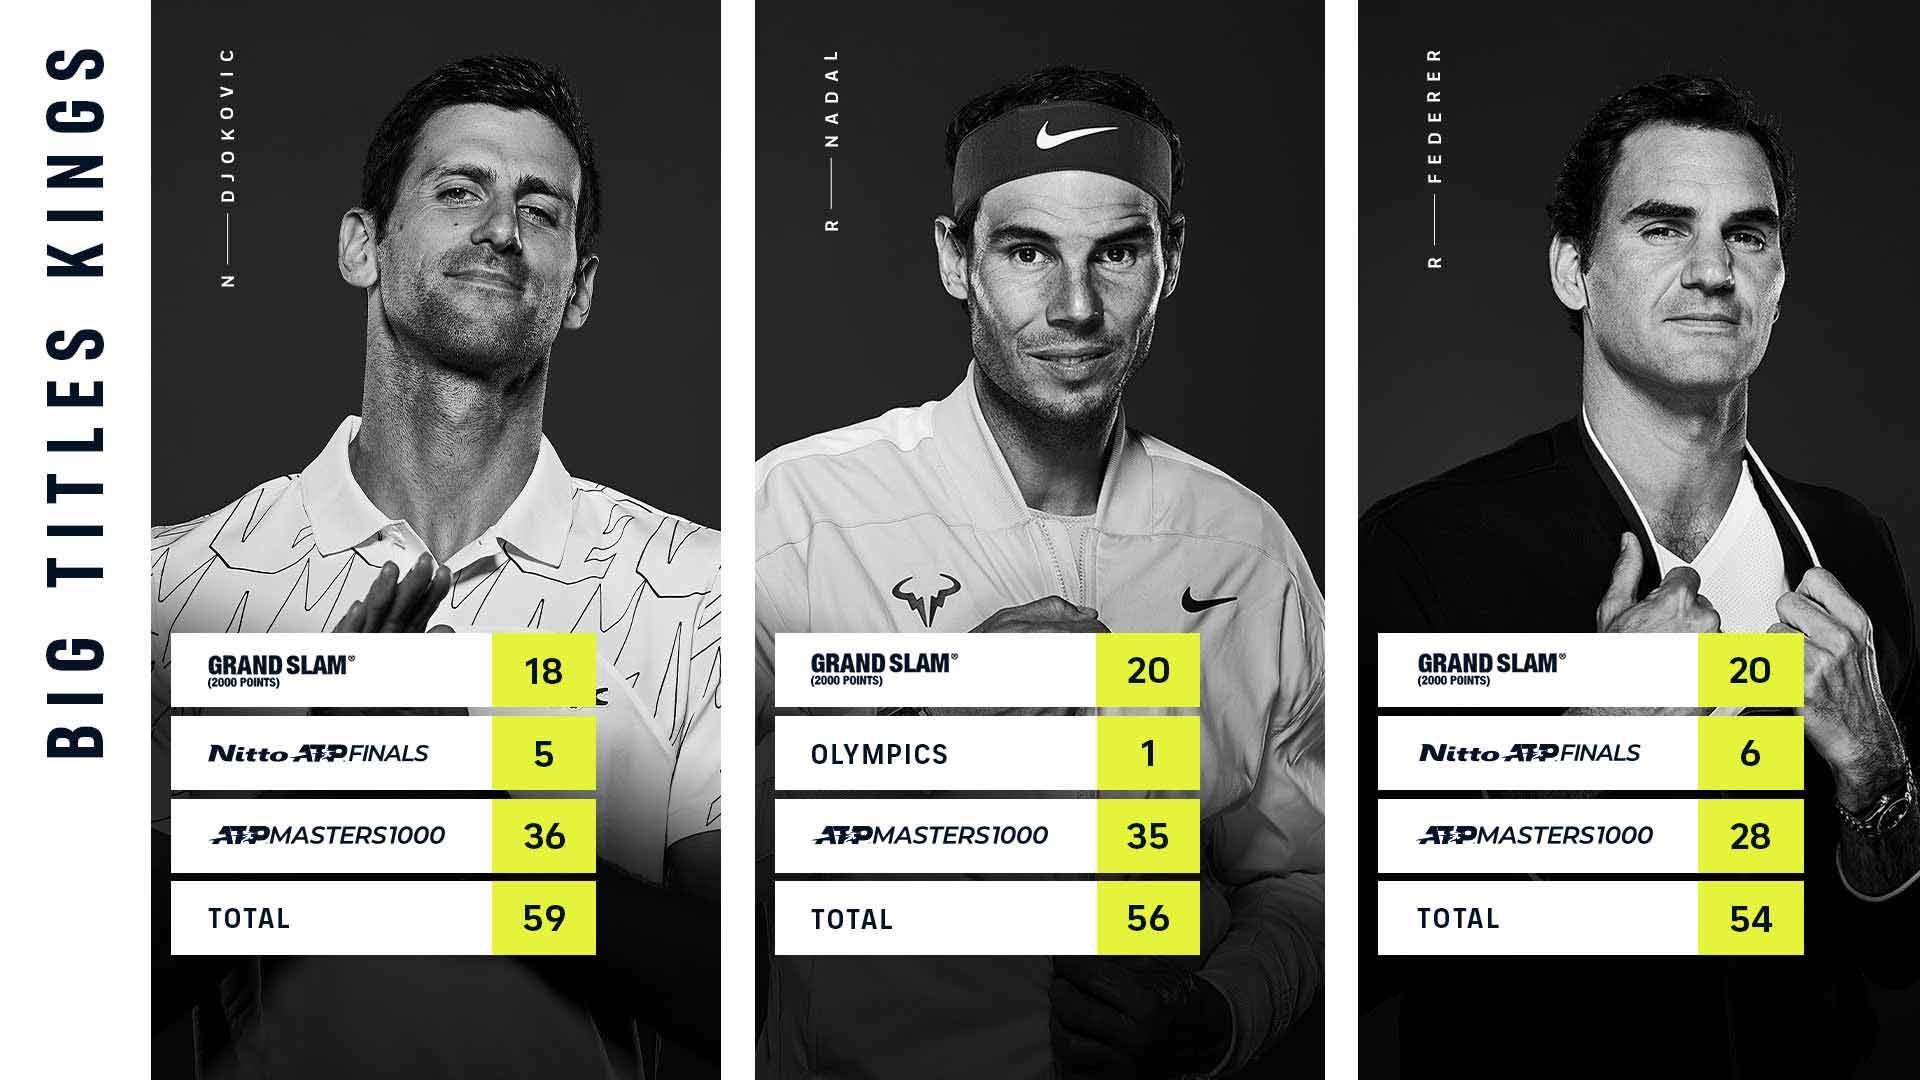 ¿Cuántos Grand Slam Djokovic ganó en 2021?